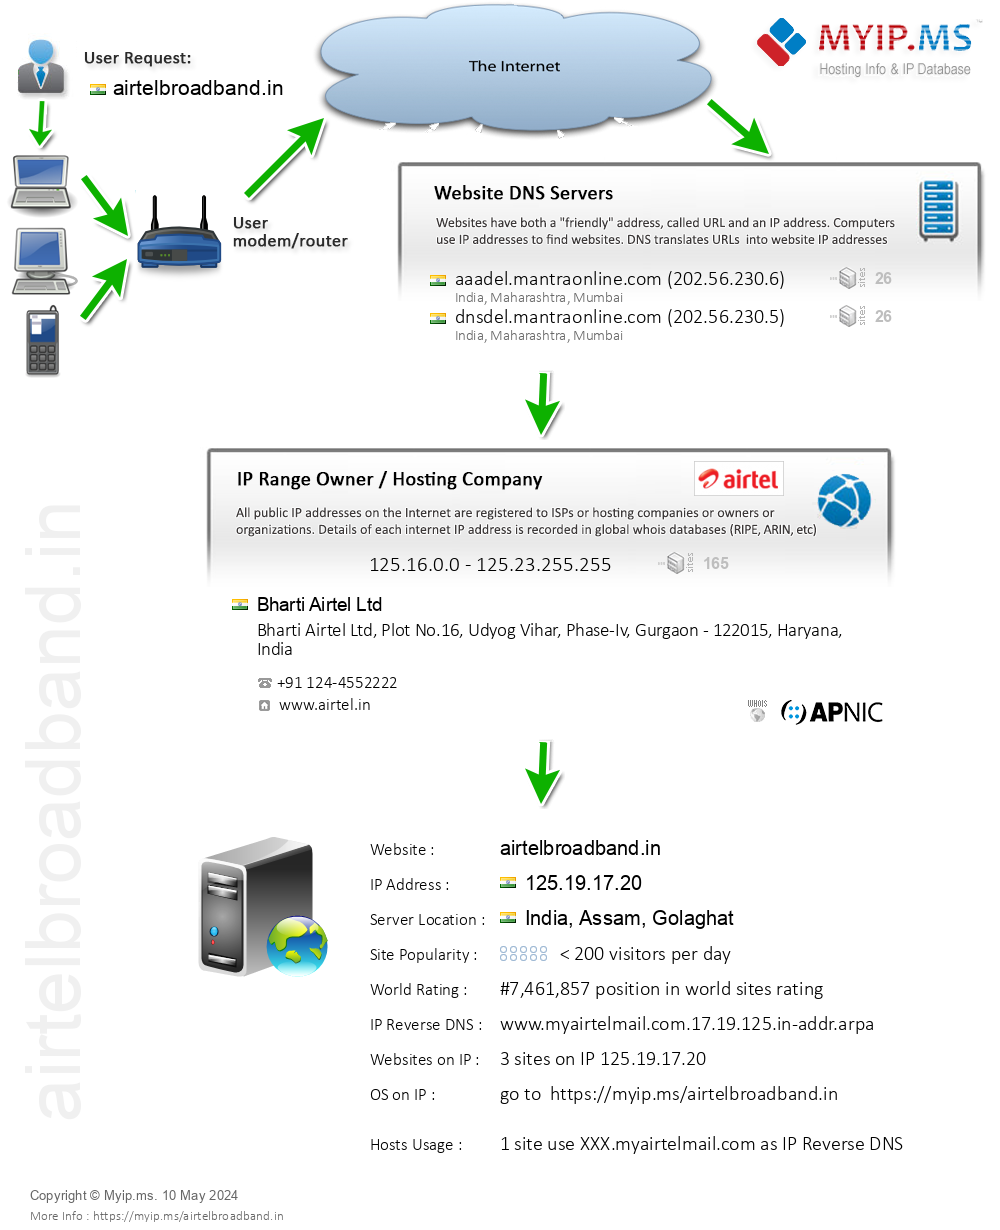 Airtelbroadband.in - Website Hosting Visual IP Diagram